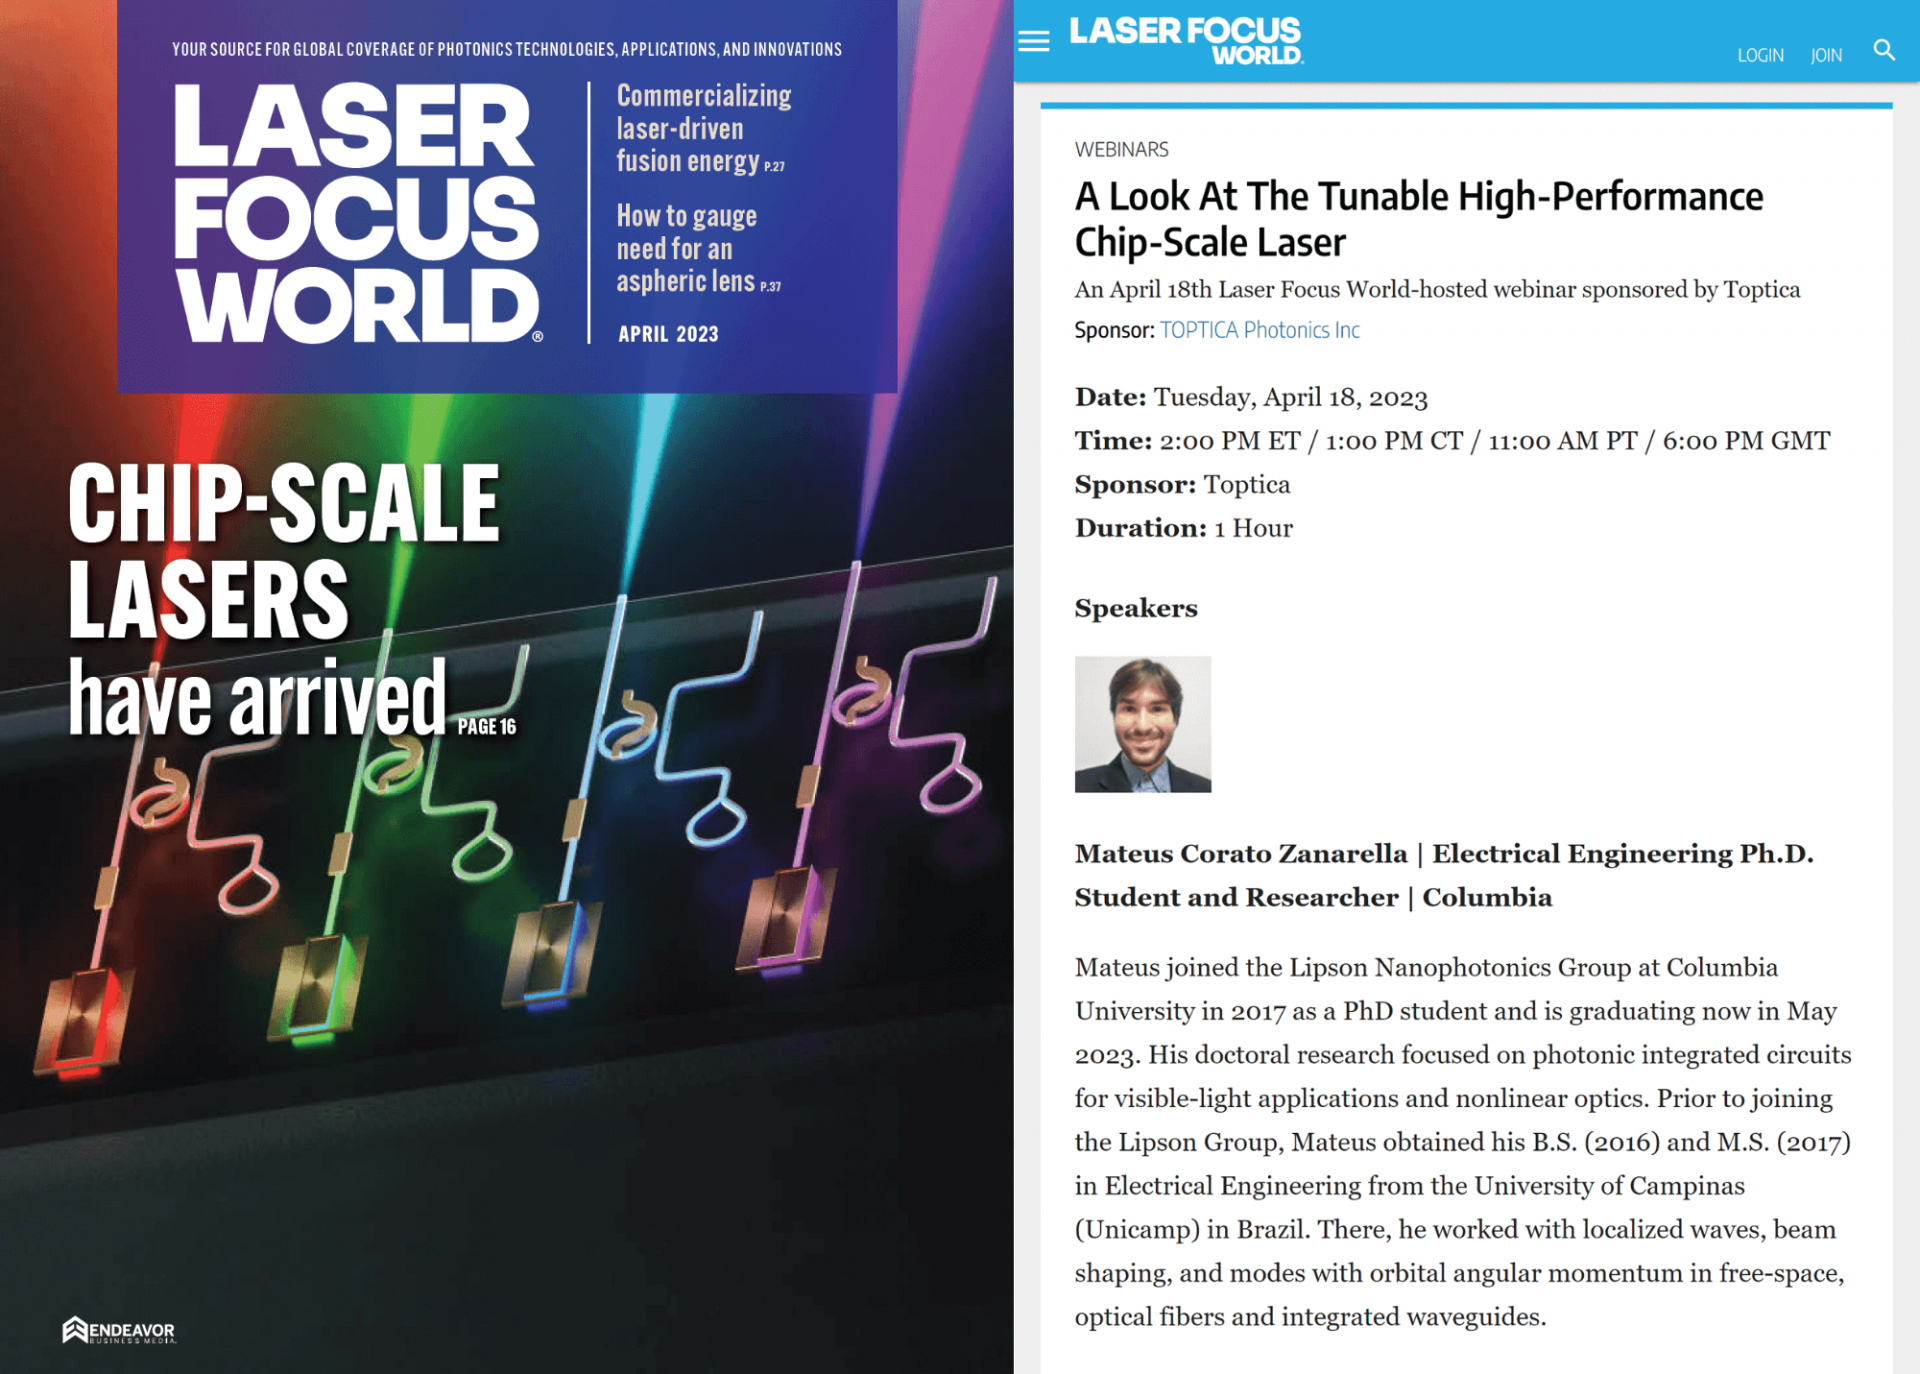 Laser Focus World cover and webinar